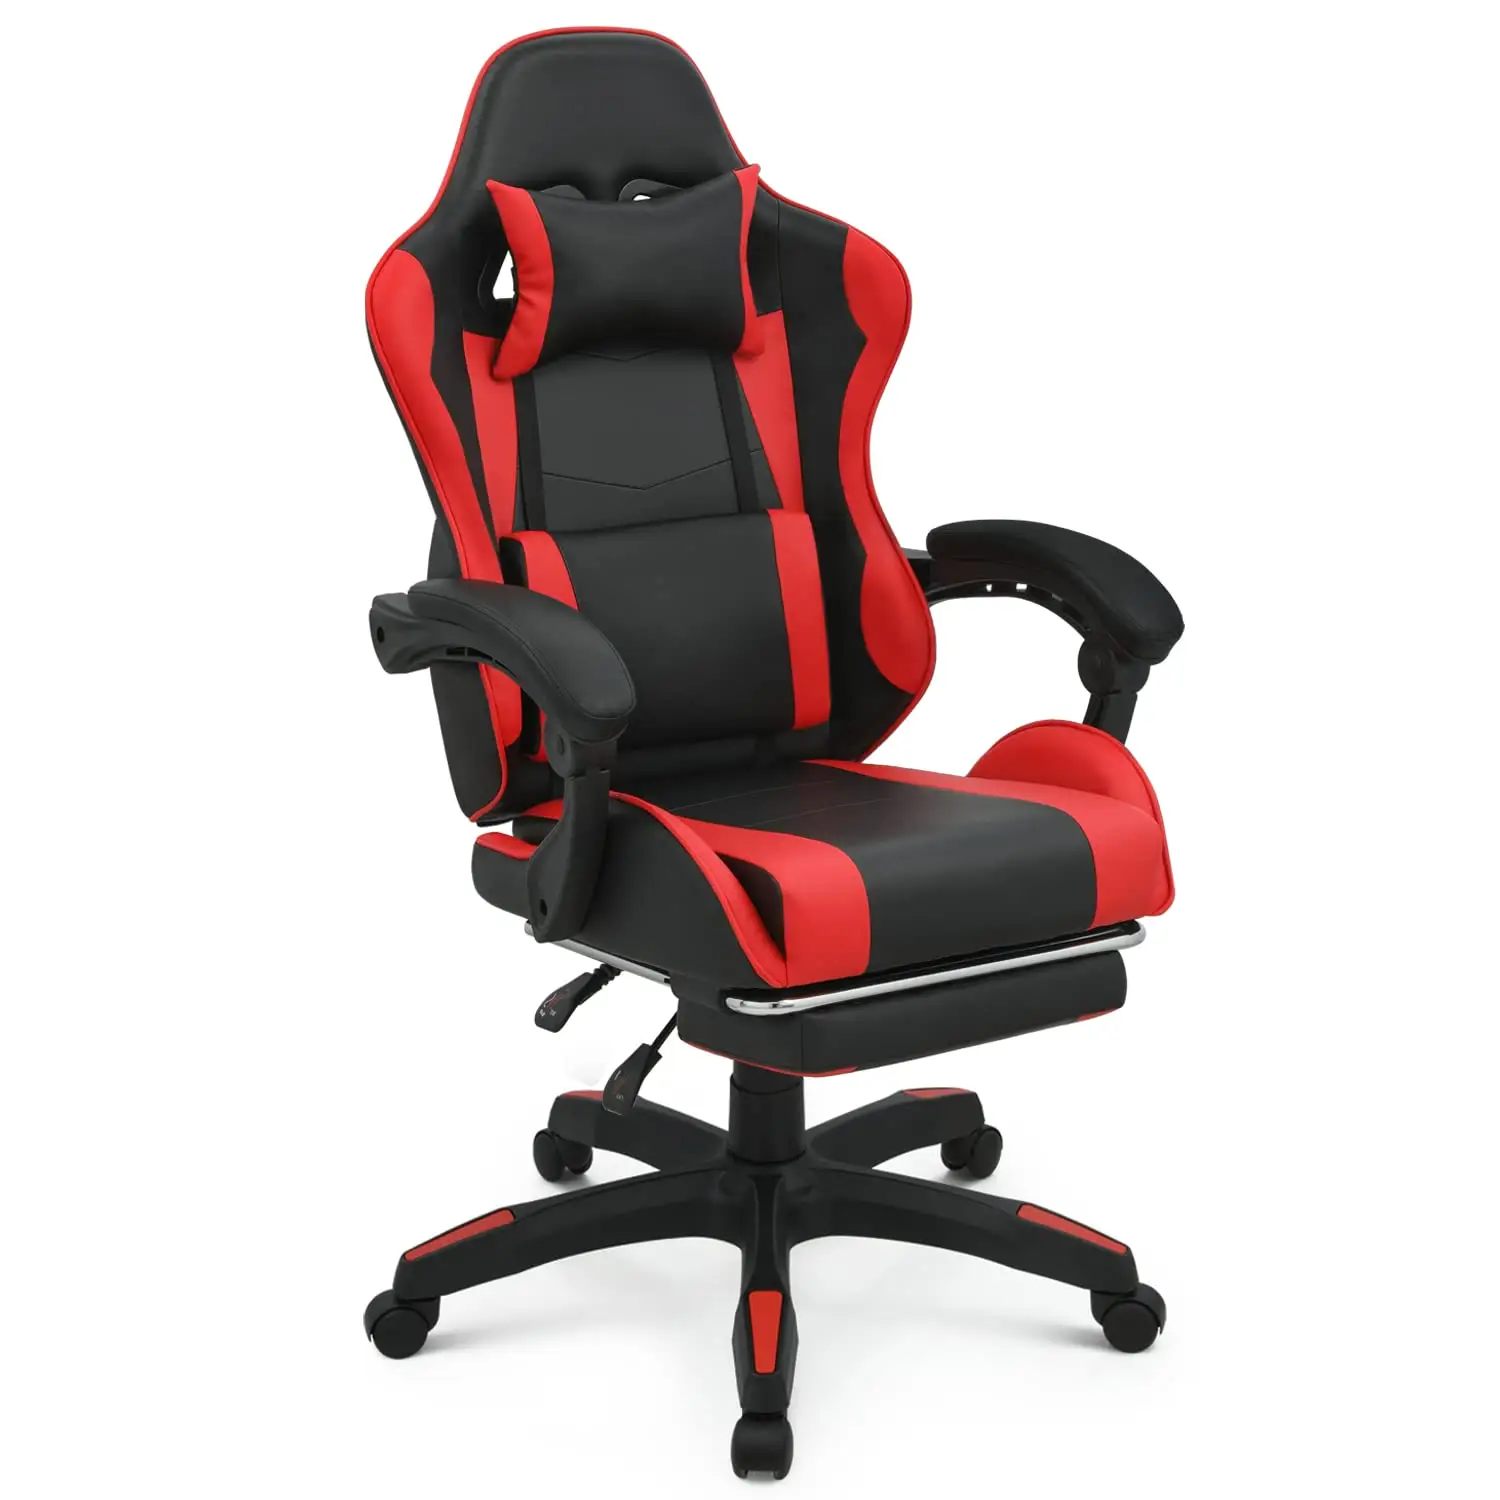 ALINUNU Factory Hot Sale Computer Gaming Chair Ergonomic Adjustable Gamer Chair with Headrest and Lumbar